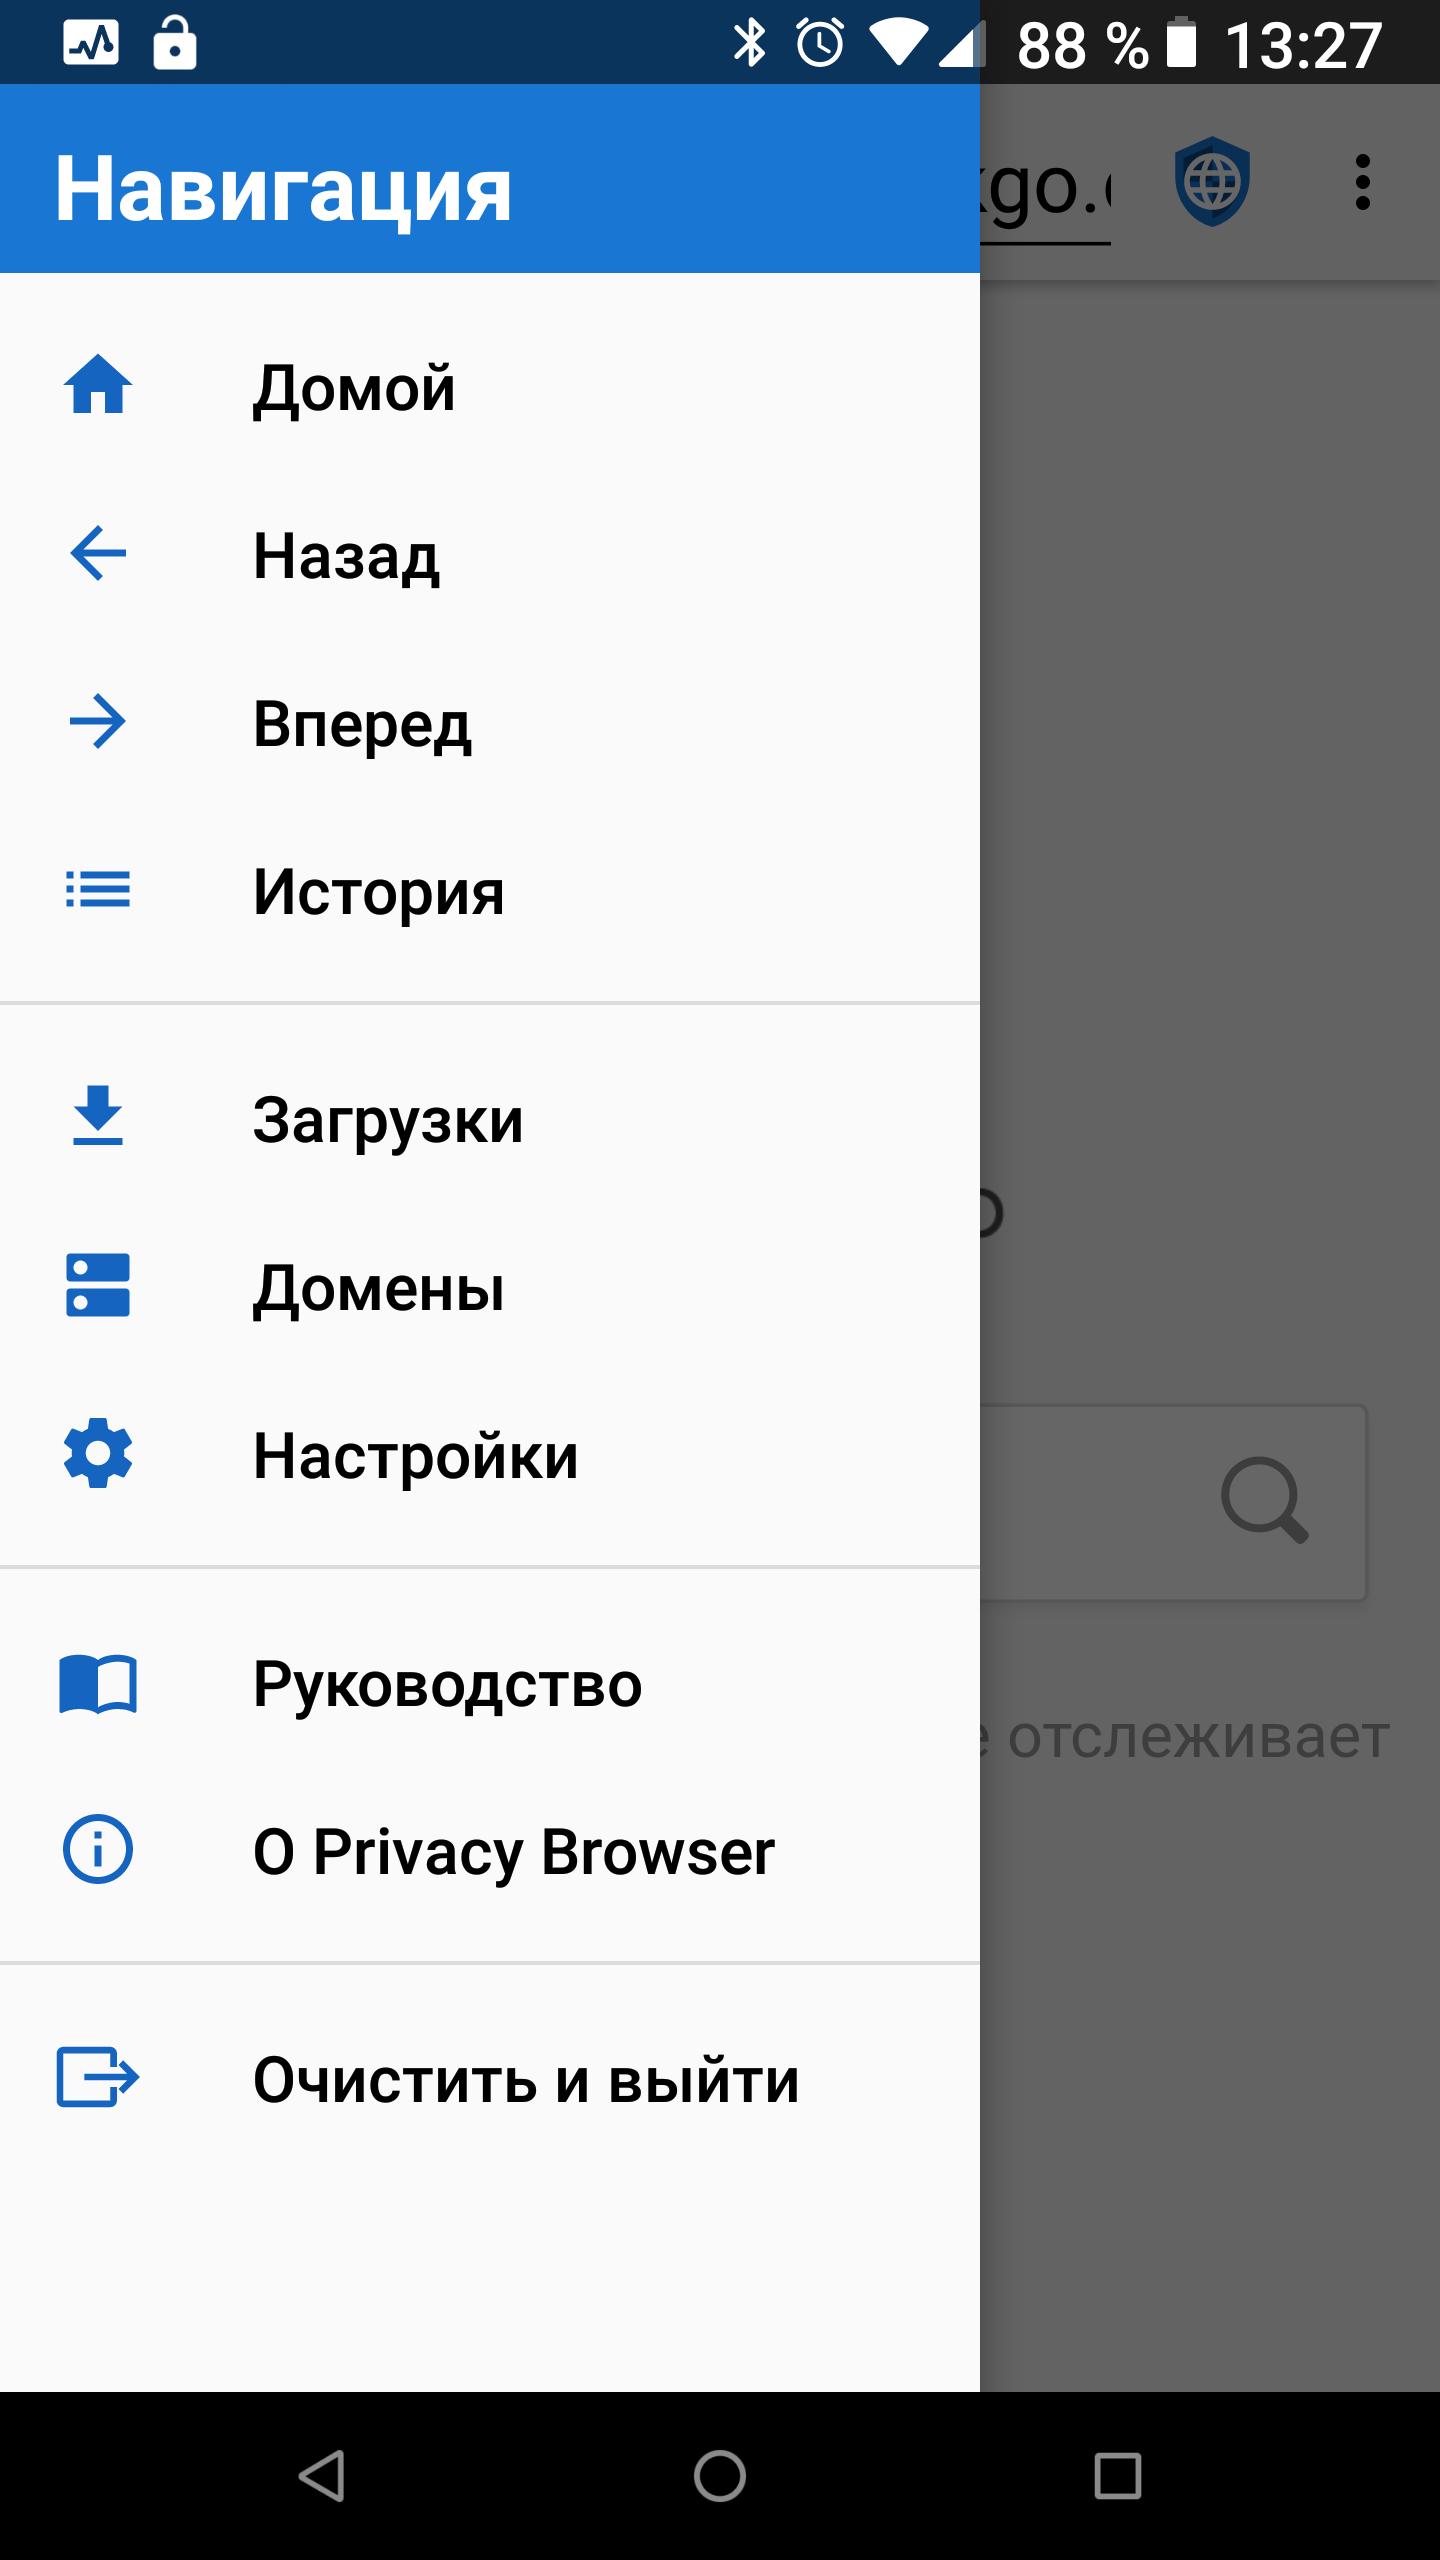 fastlane/metadata/android/ru/images/phoneScreenshots/05-NavigationMenu.png